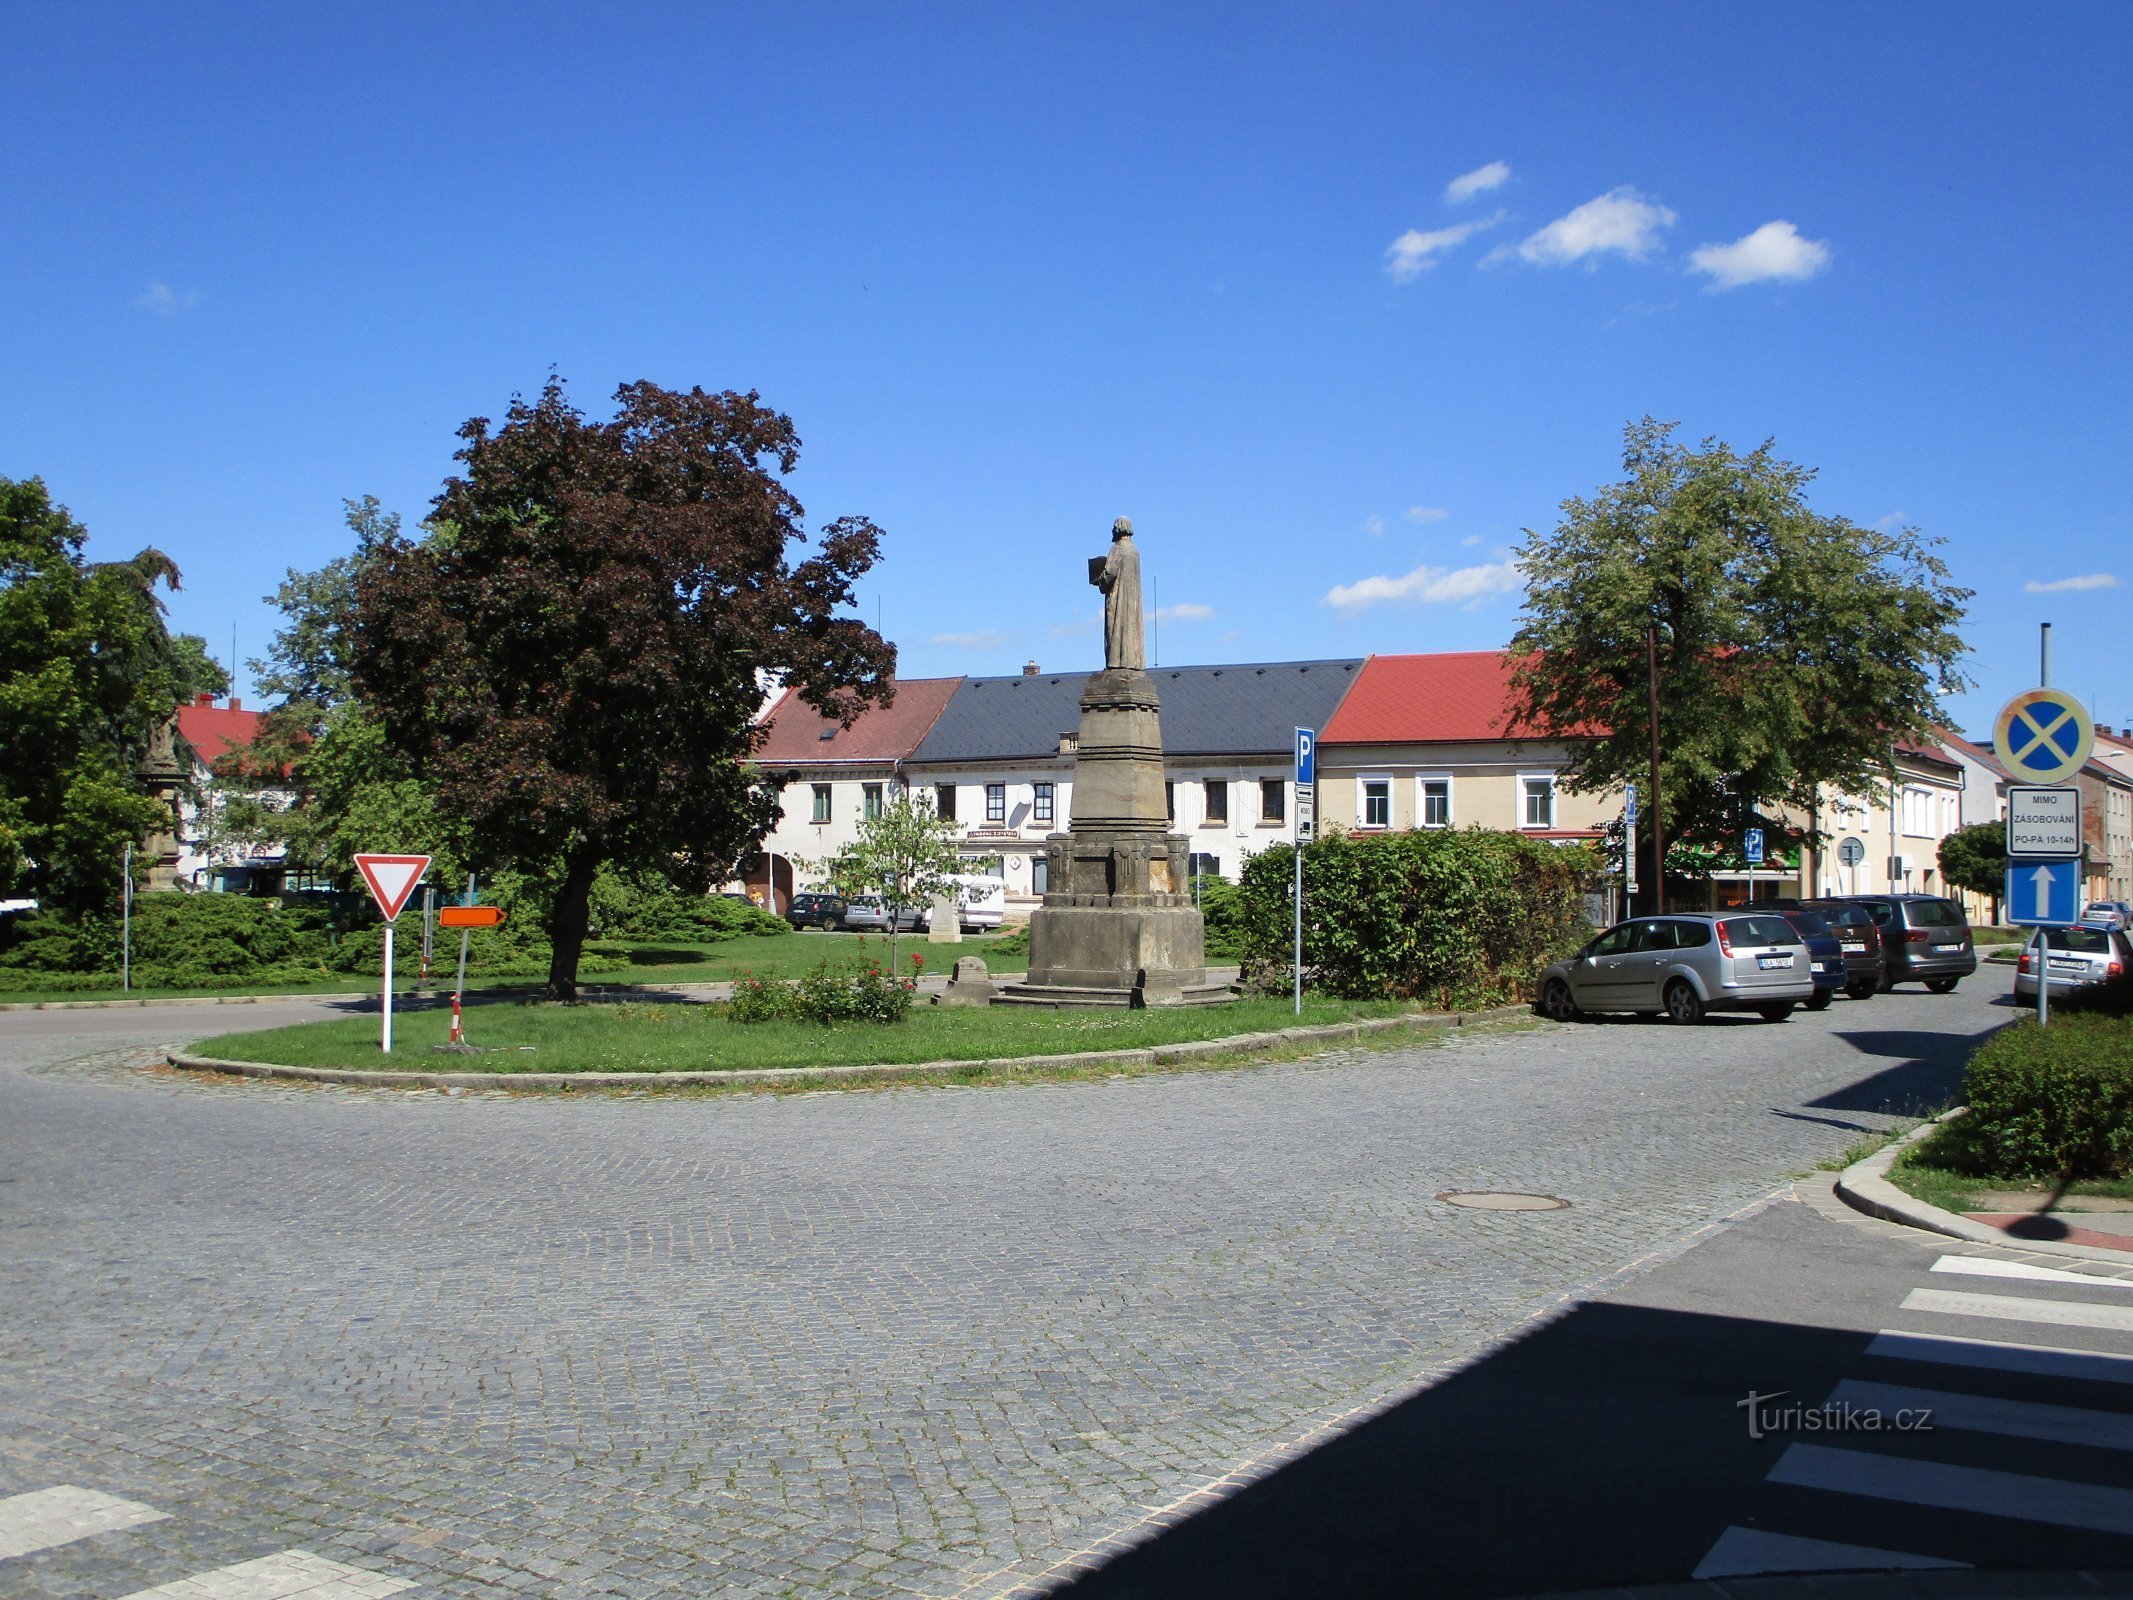 Hus-torget med monumentet över M. Jan Hus (Nechanice, 18.8.2019/XNUMX/XNUMX)